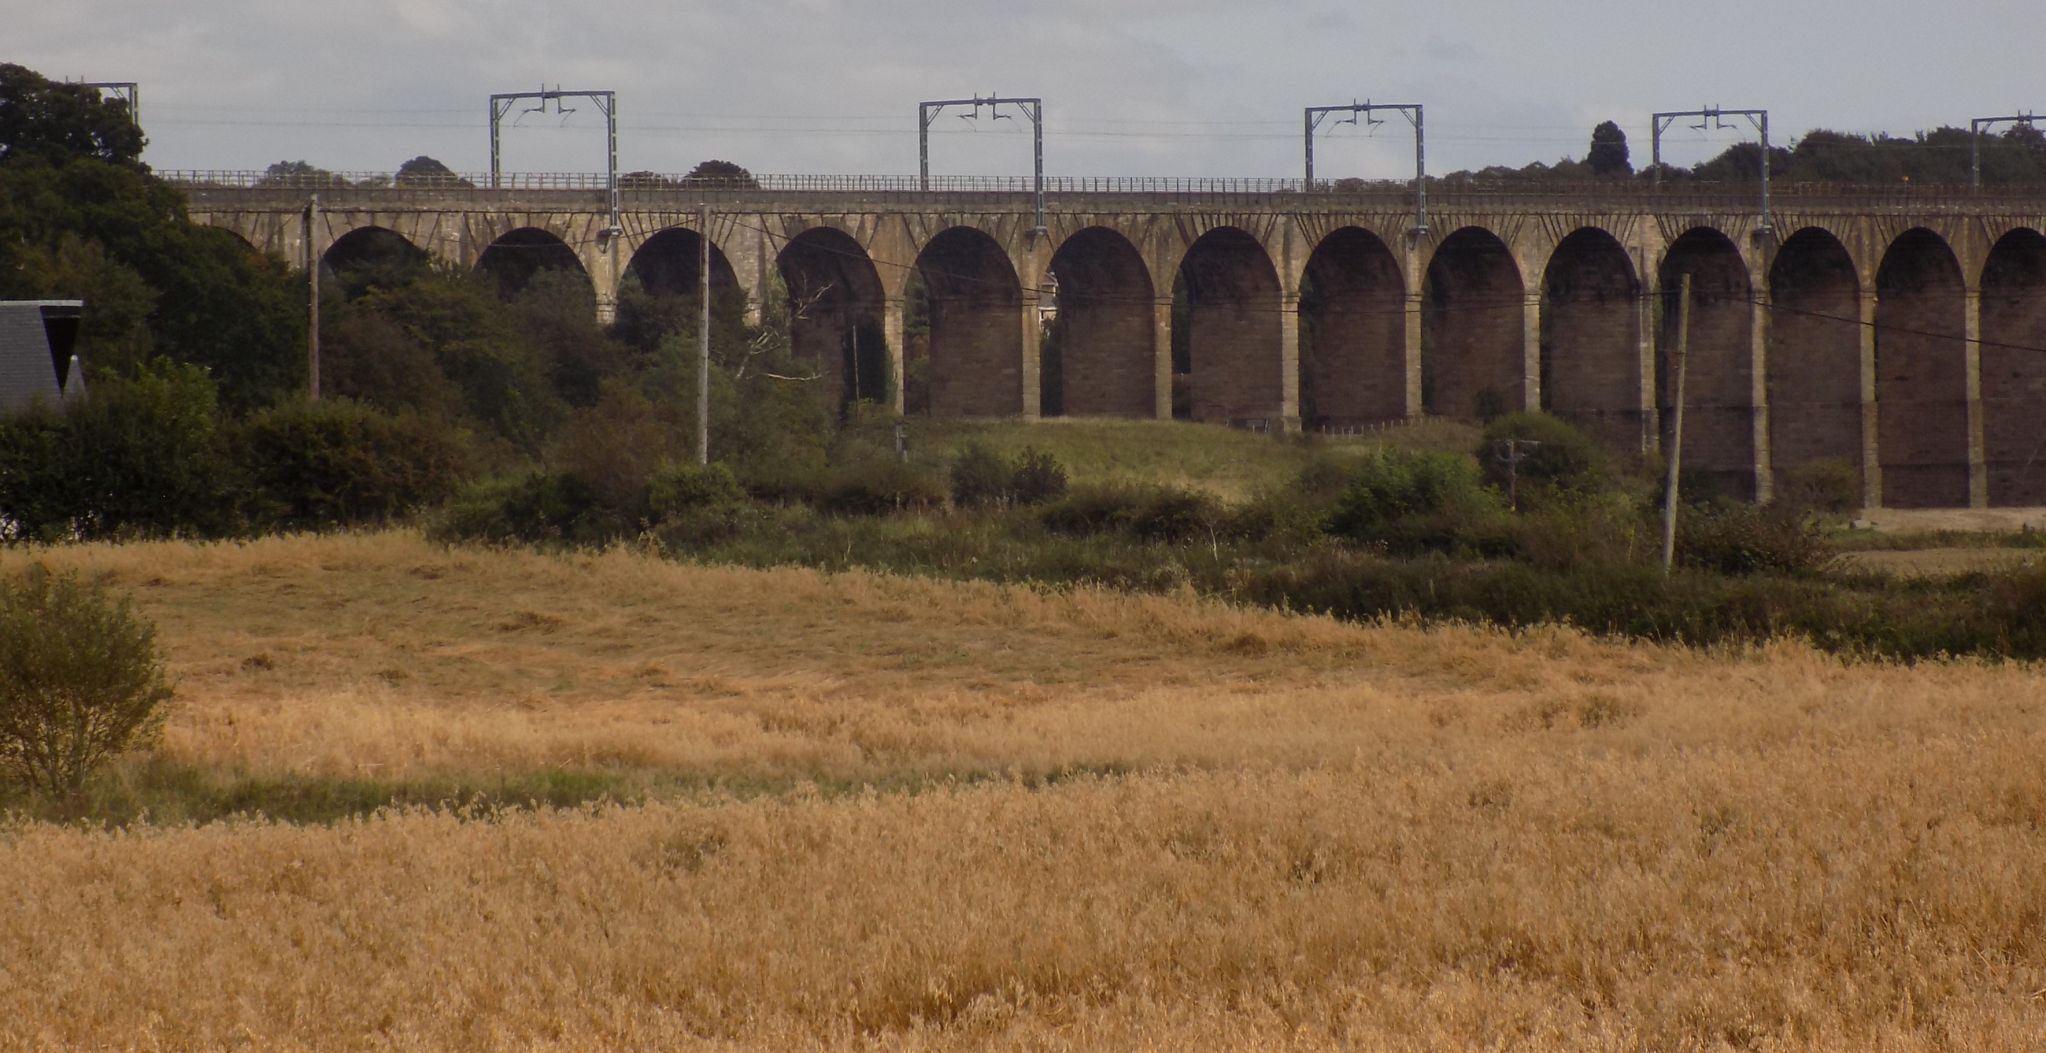 The Avon Railway Viaduct